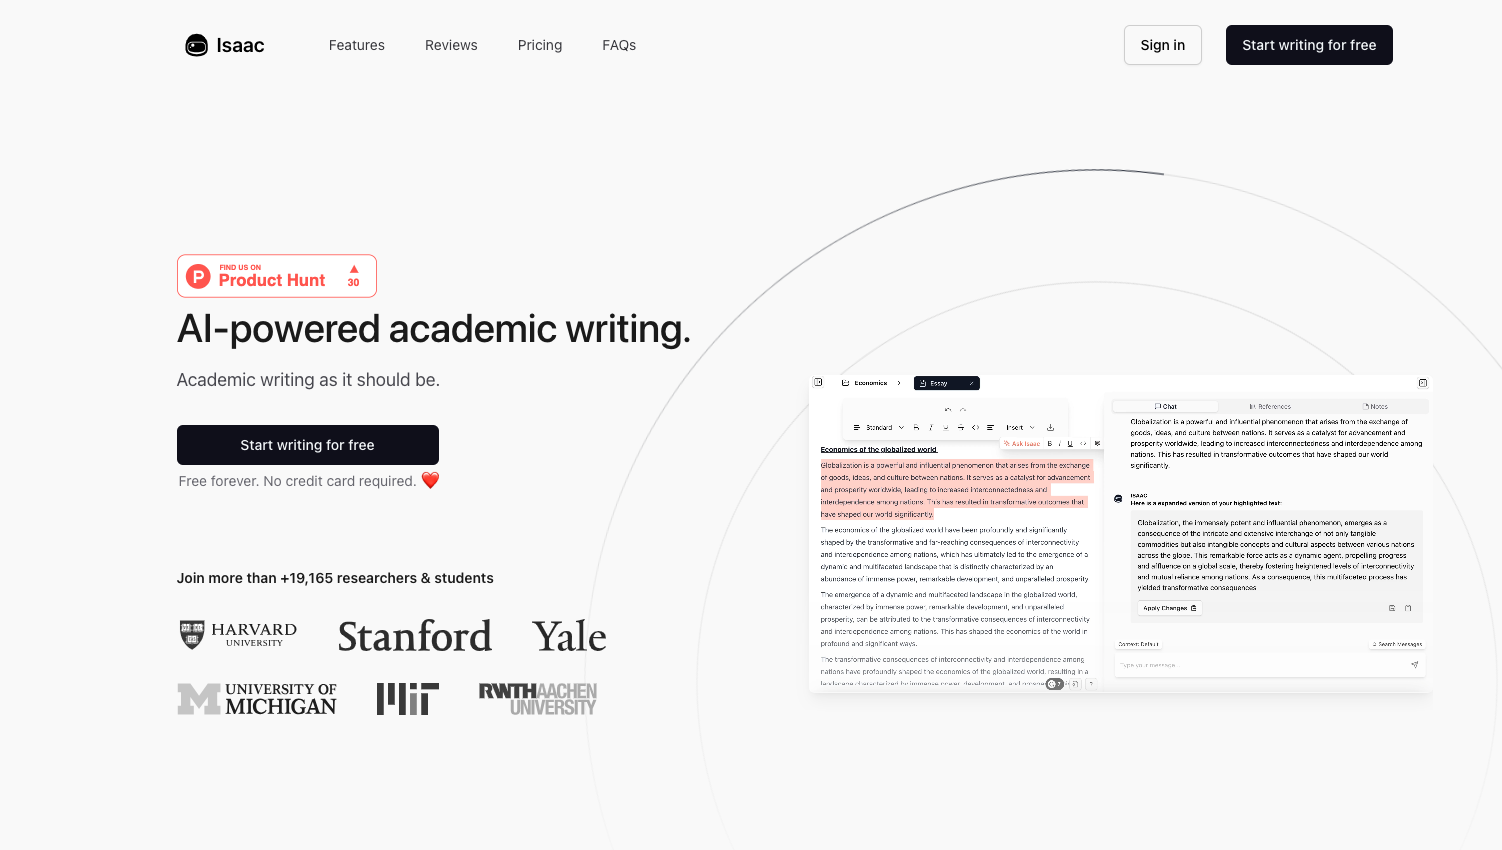 Isaac's Editor for AI-powered academic writing